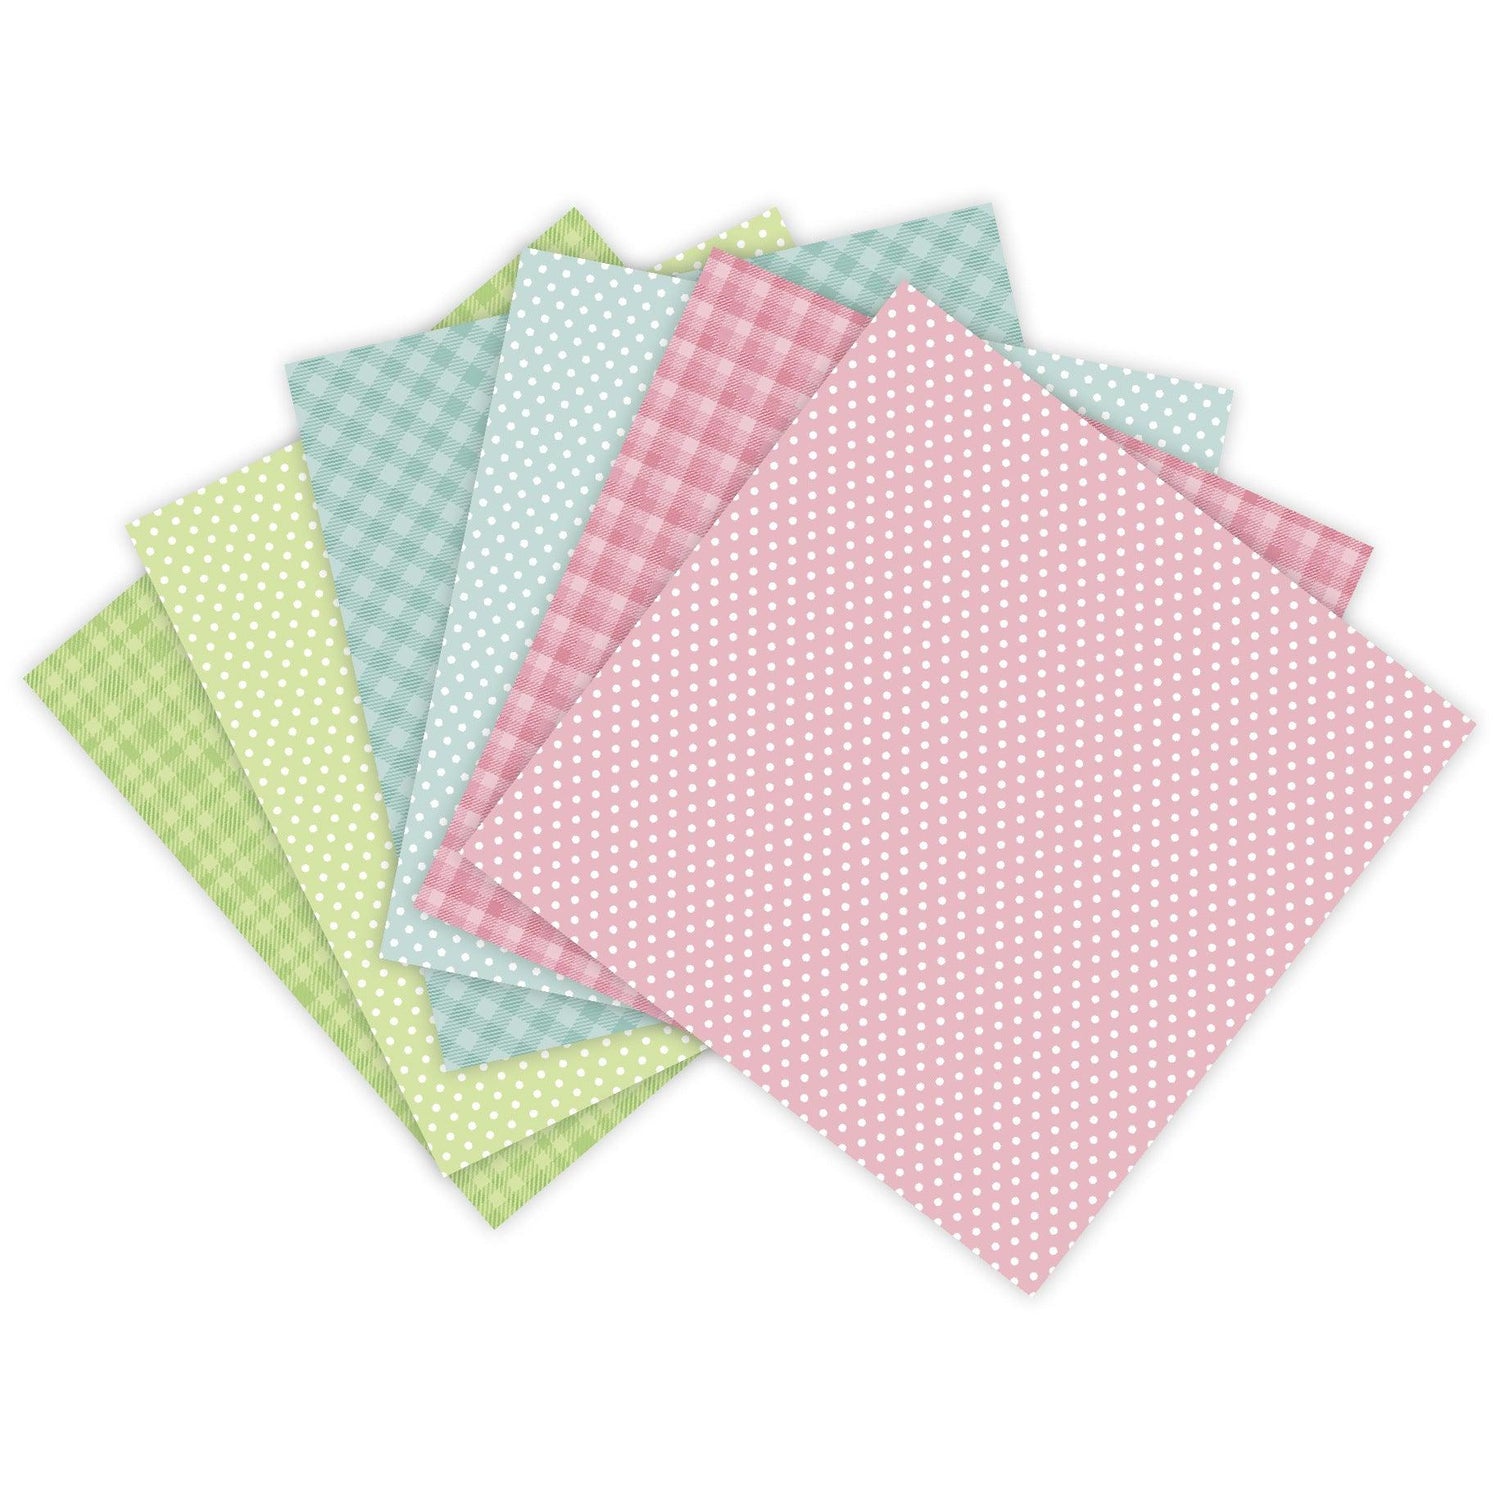 Decorative Paper - Decorative Paper - Spring Color Background Paper -